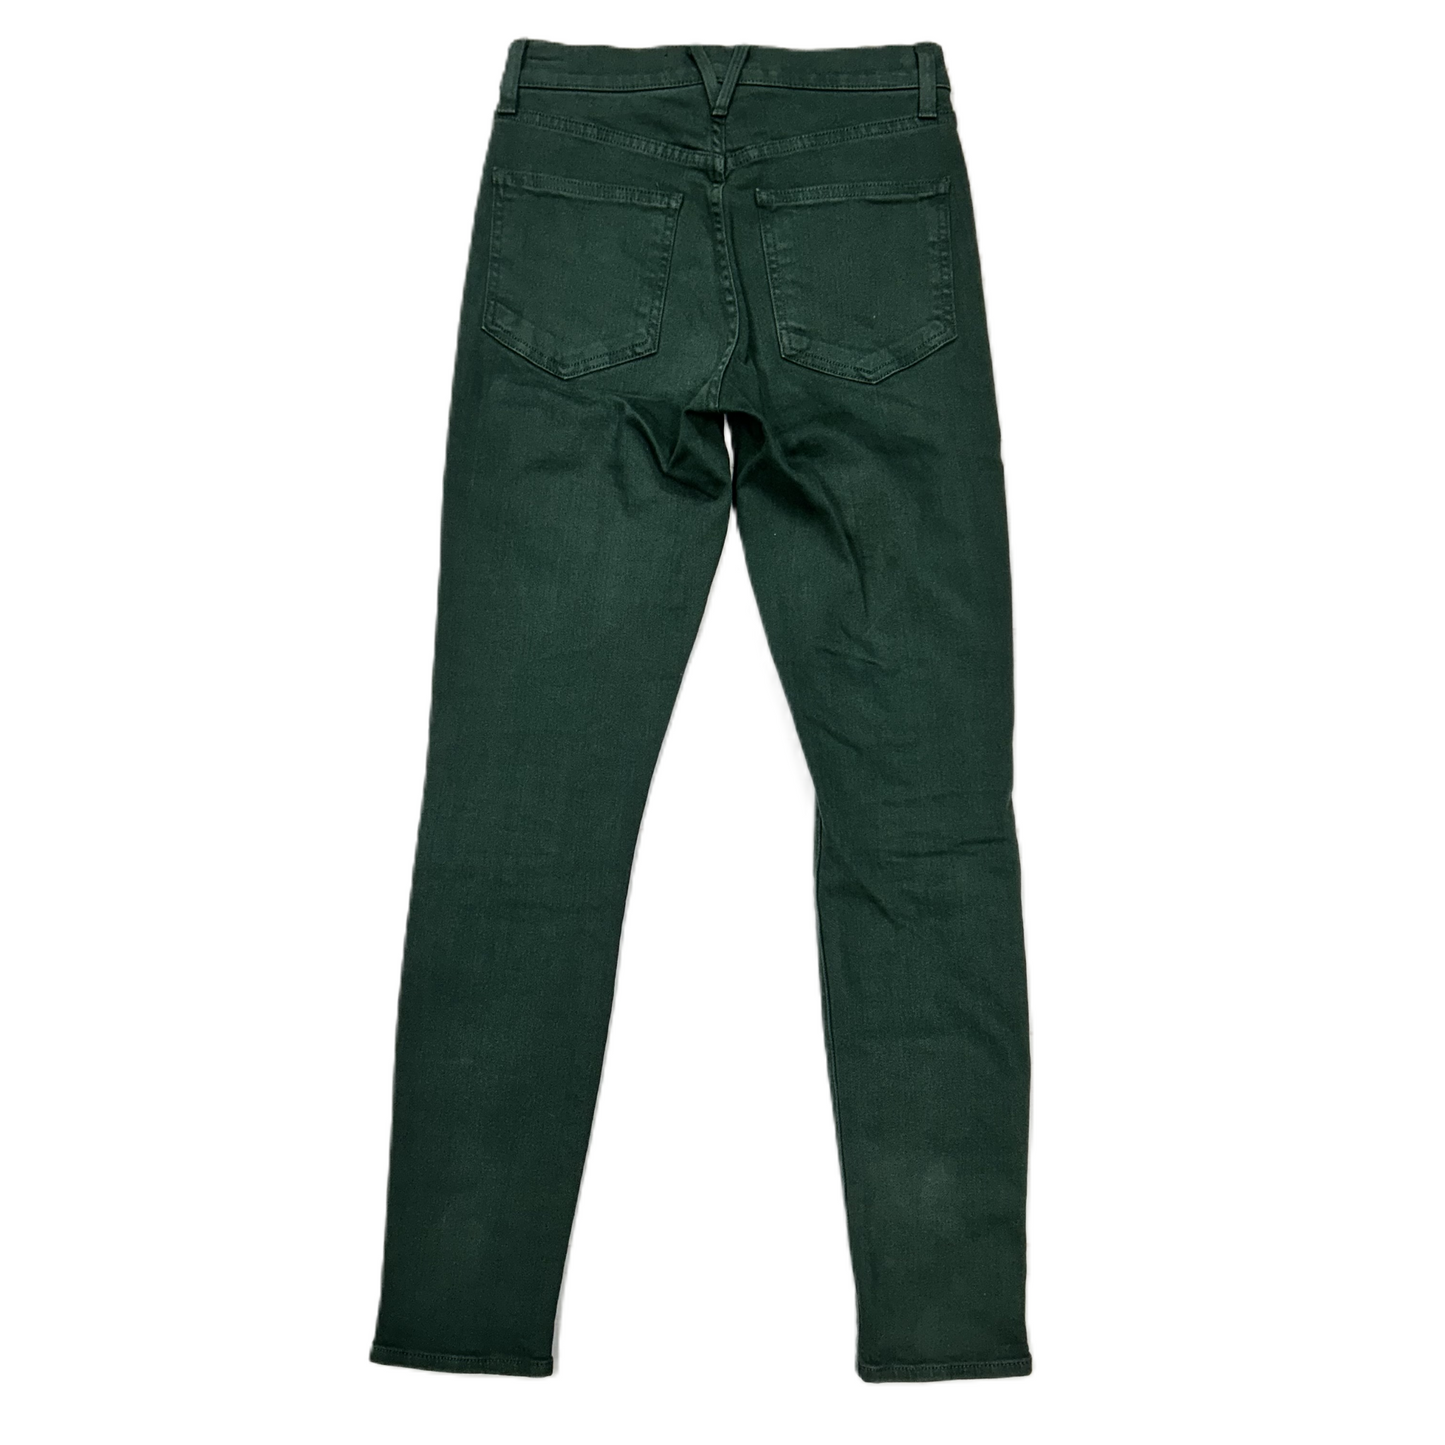 Green Denim Jeans Designer By Veronica Beard, Size: 2